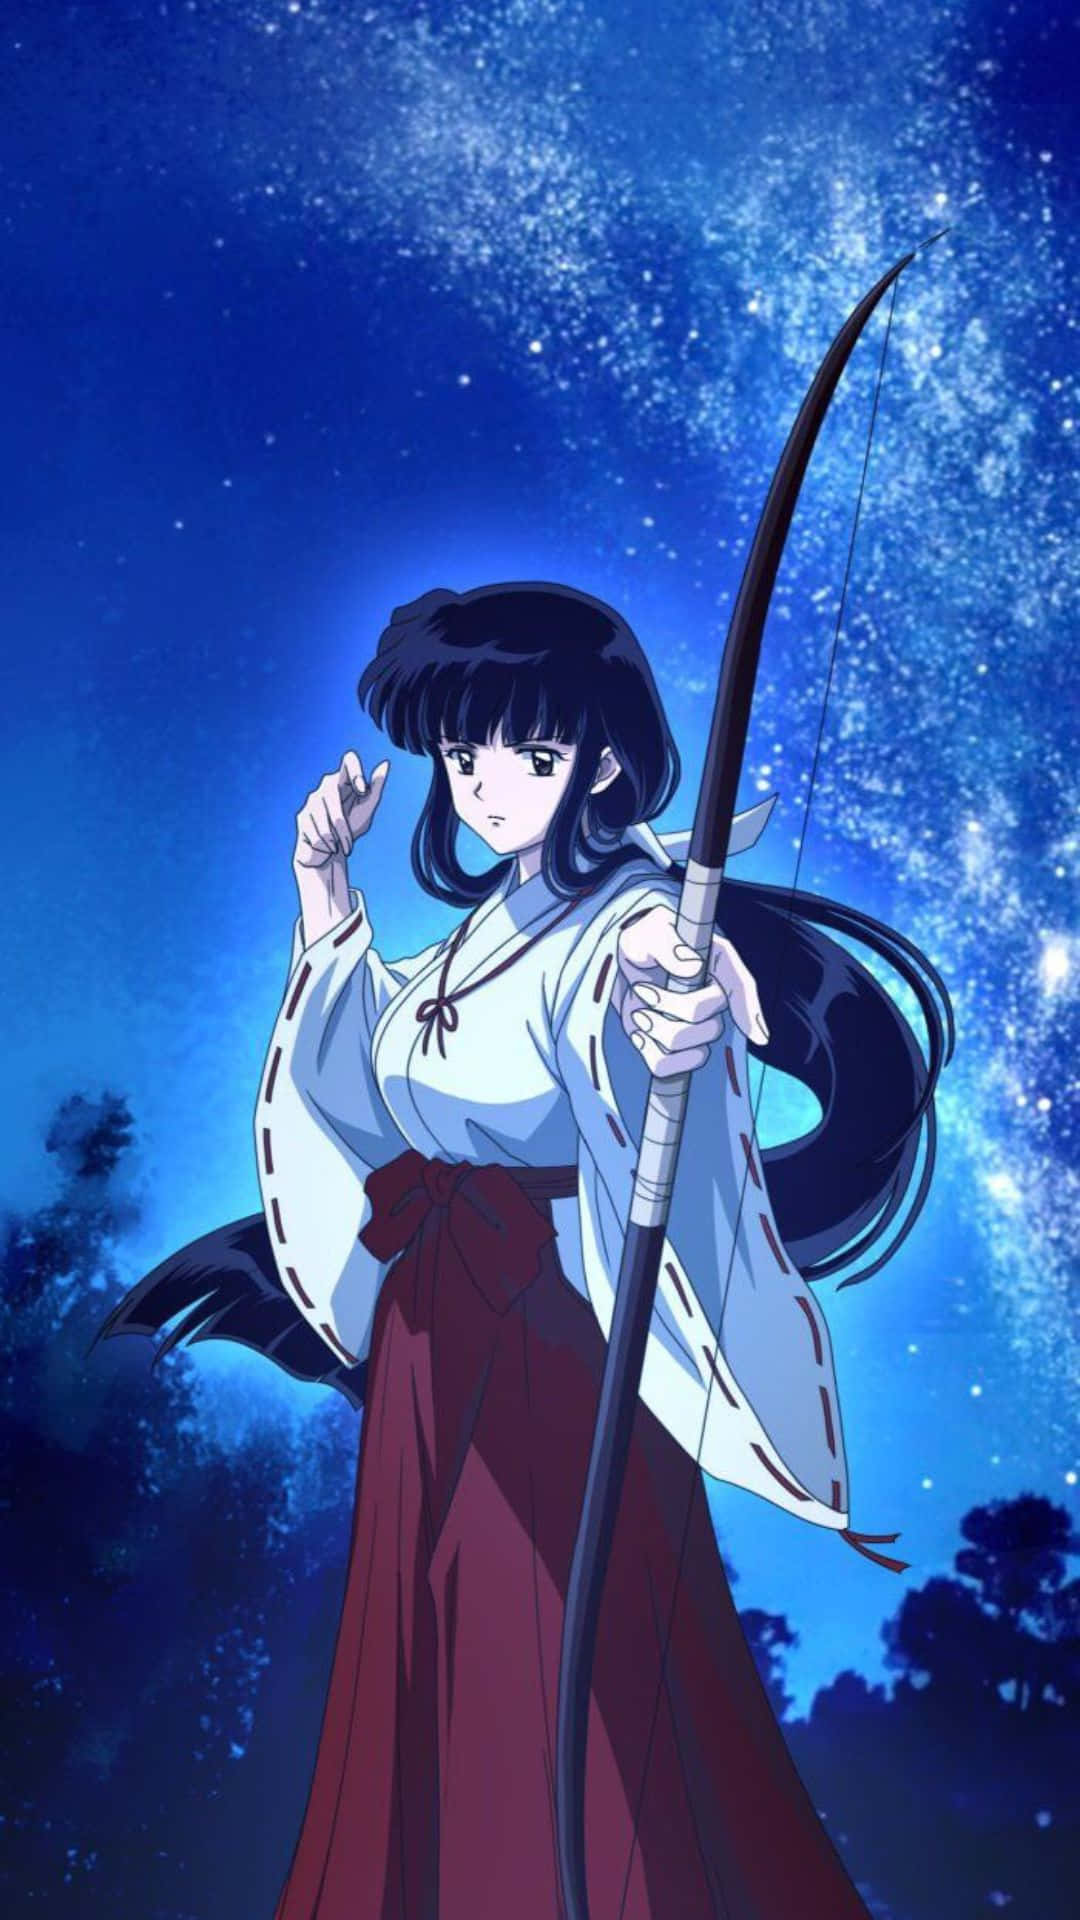 Kikyo, the powerful priestess from the anime Inuyasha Wallpaper